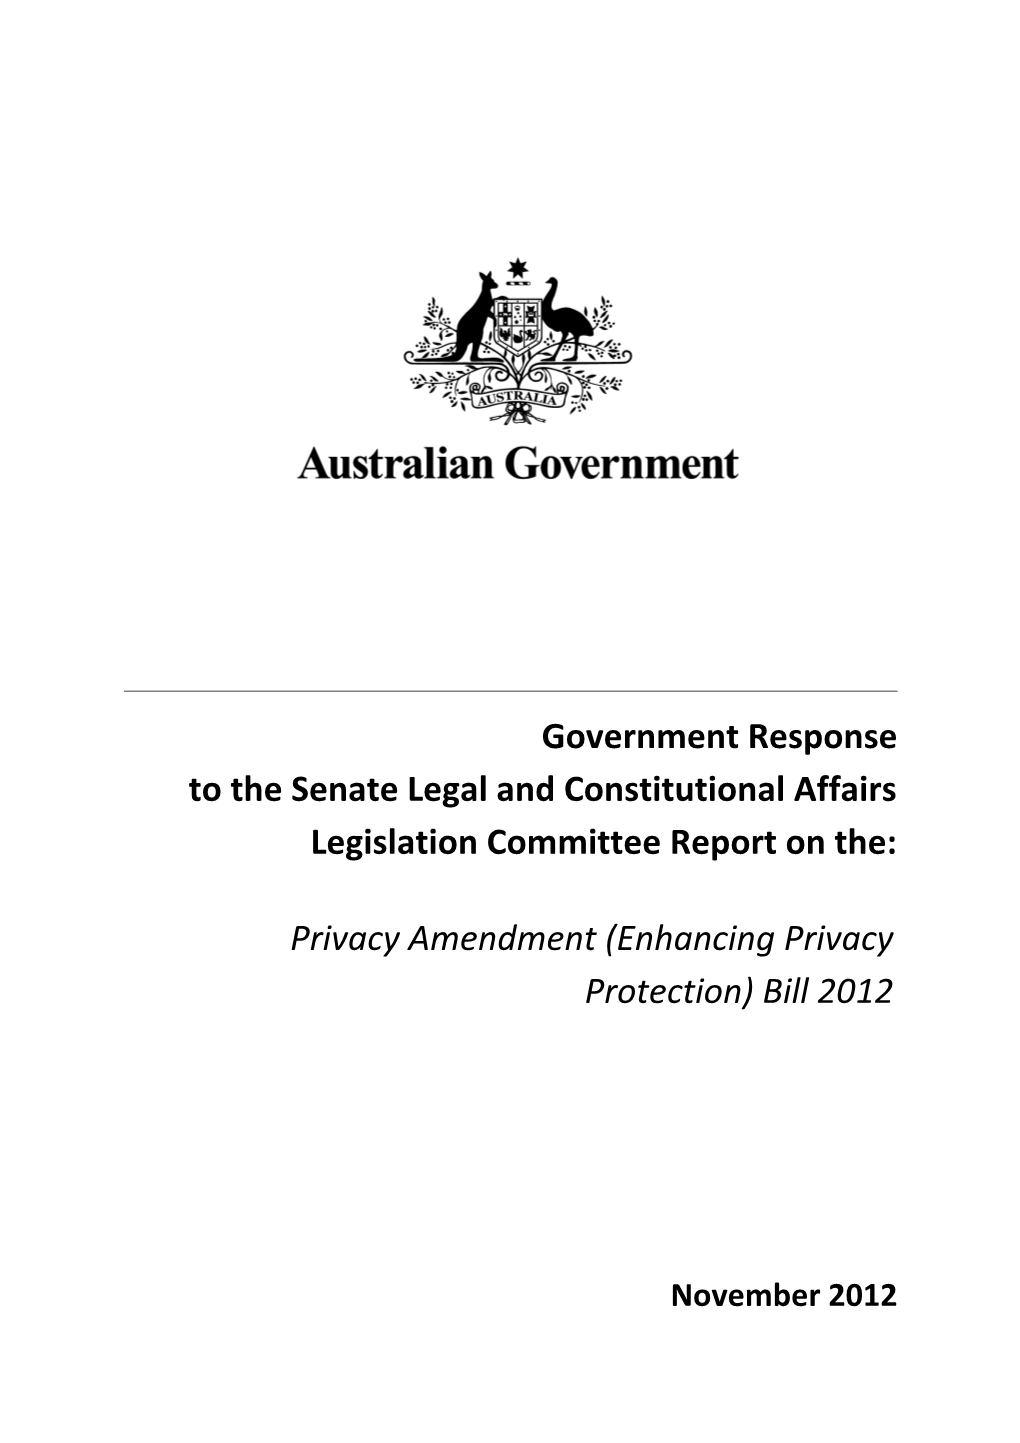 BILB - Privacy Amendment Bill - FINAL - Government Response to Senate Committee Report